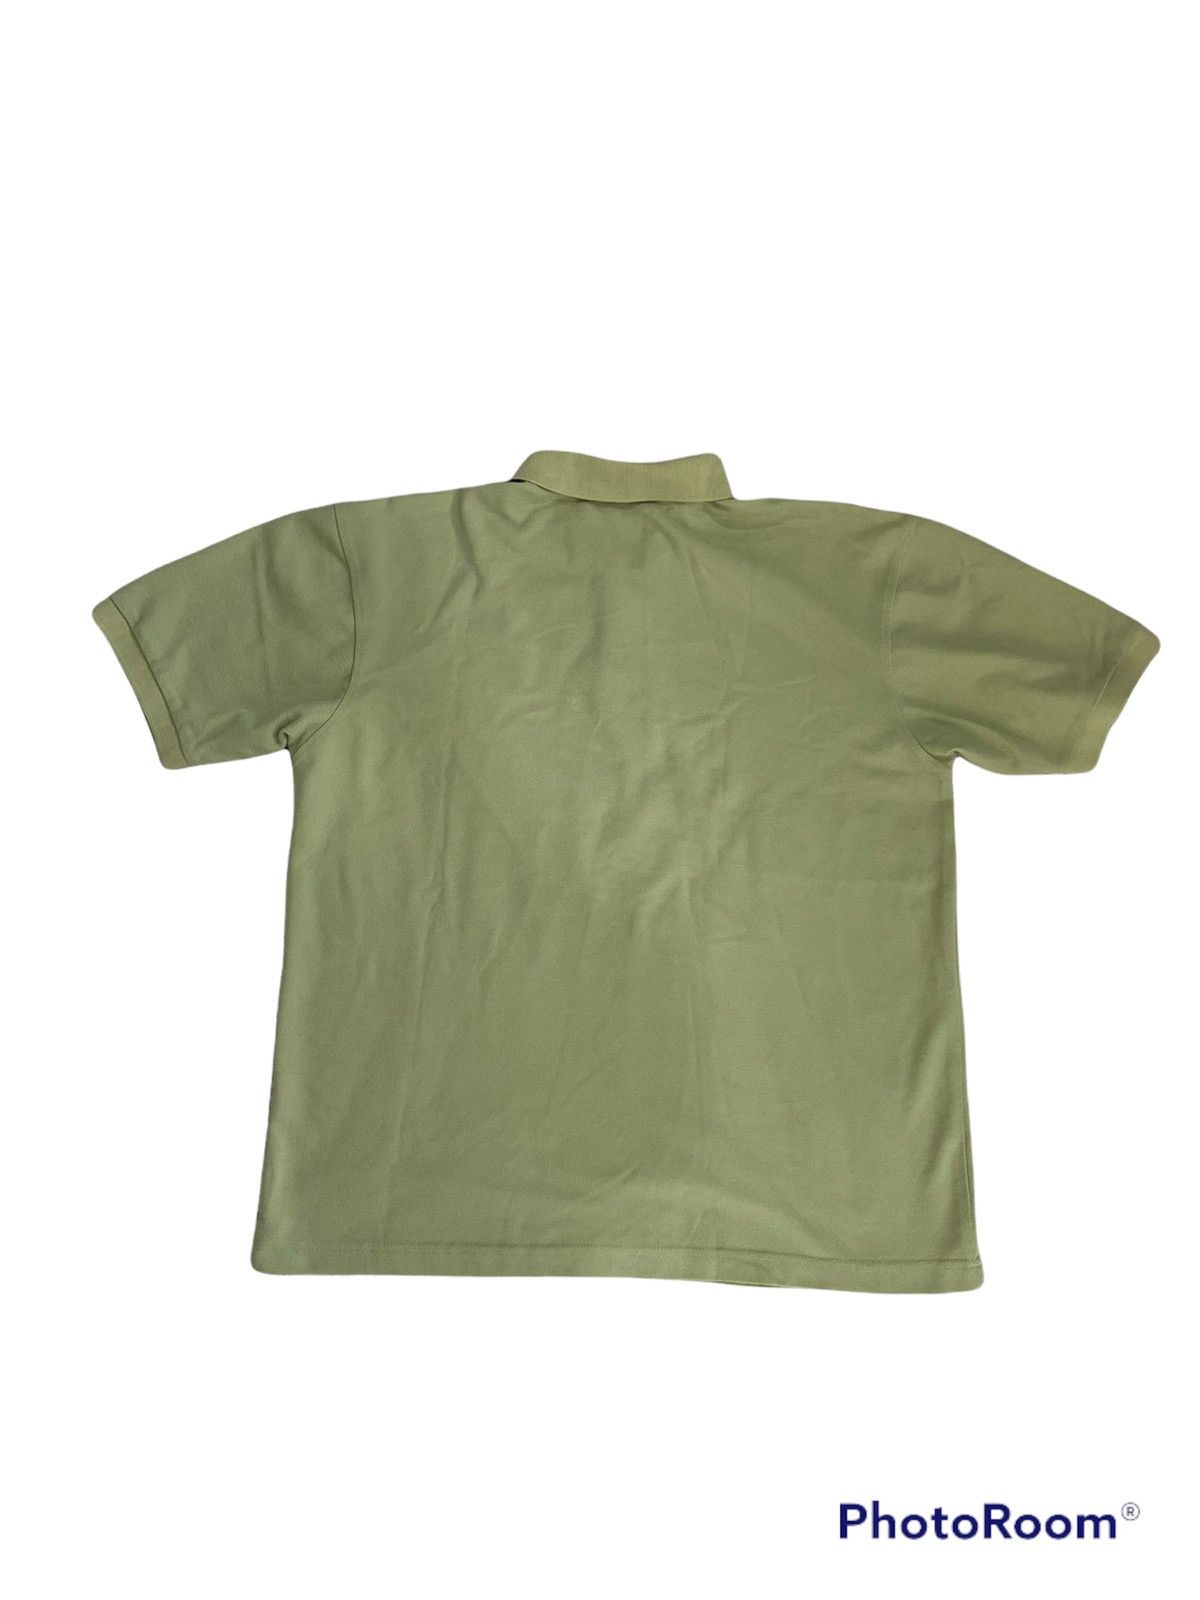 Burberry Burberry London green polo shirt men’s size xxl Size US XXL / EU 58 / 5 - 3 Thumbnail